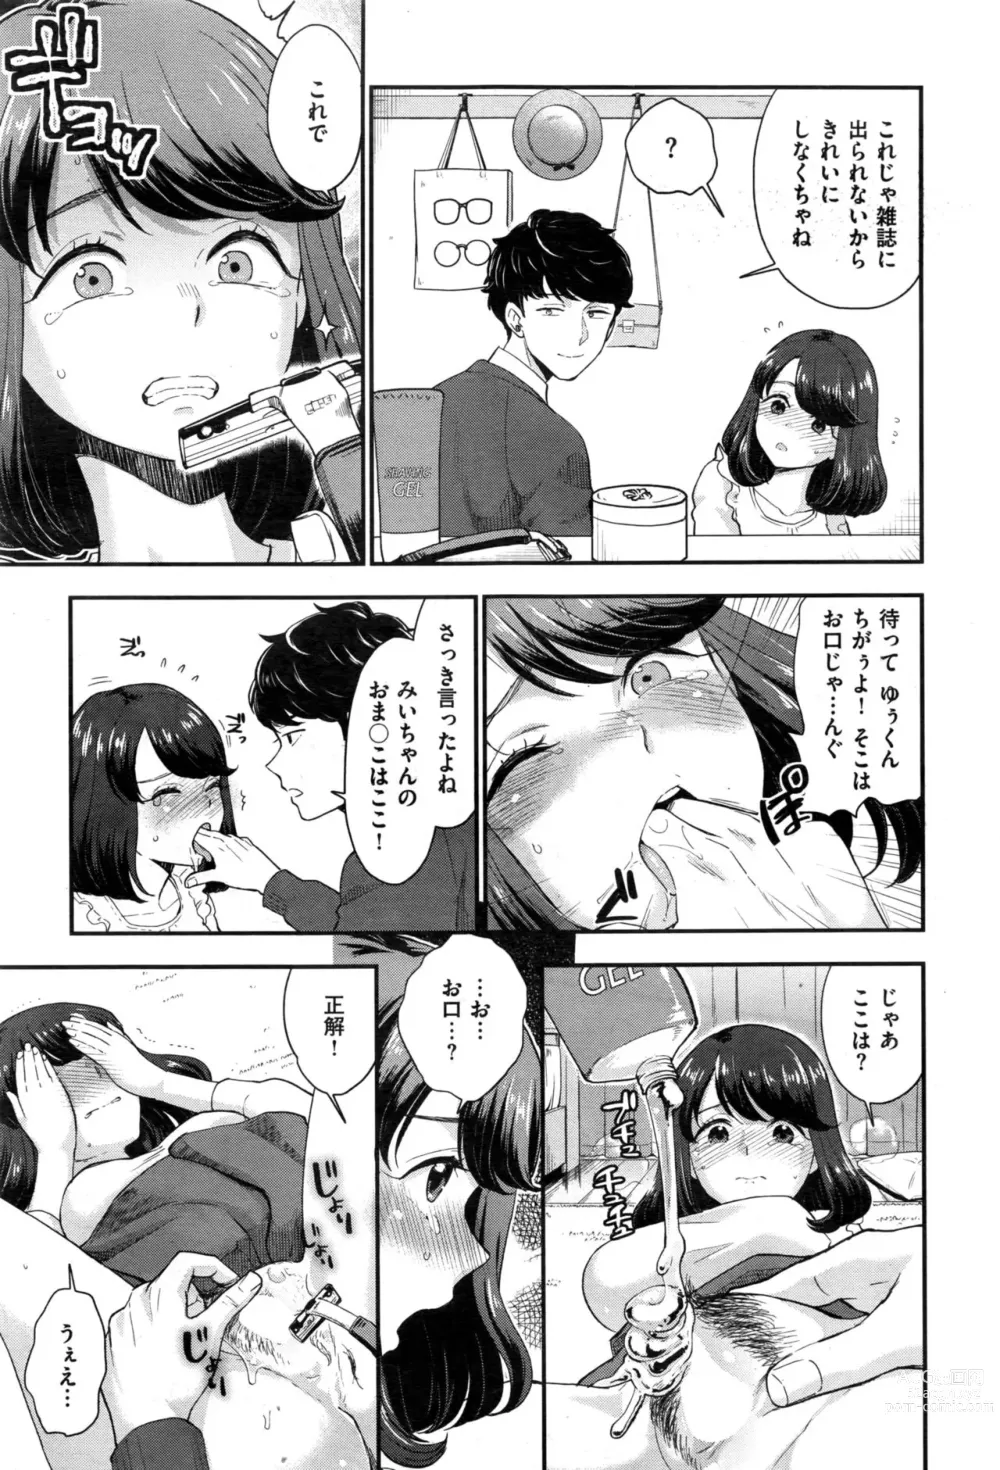 Page 9 of manga Masaka Sakasama